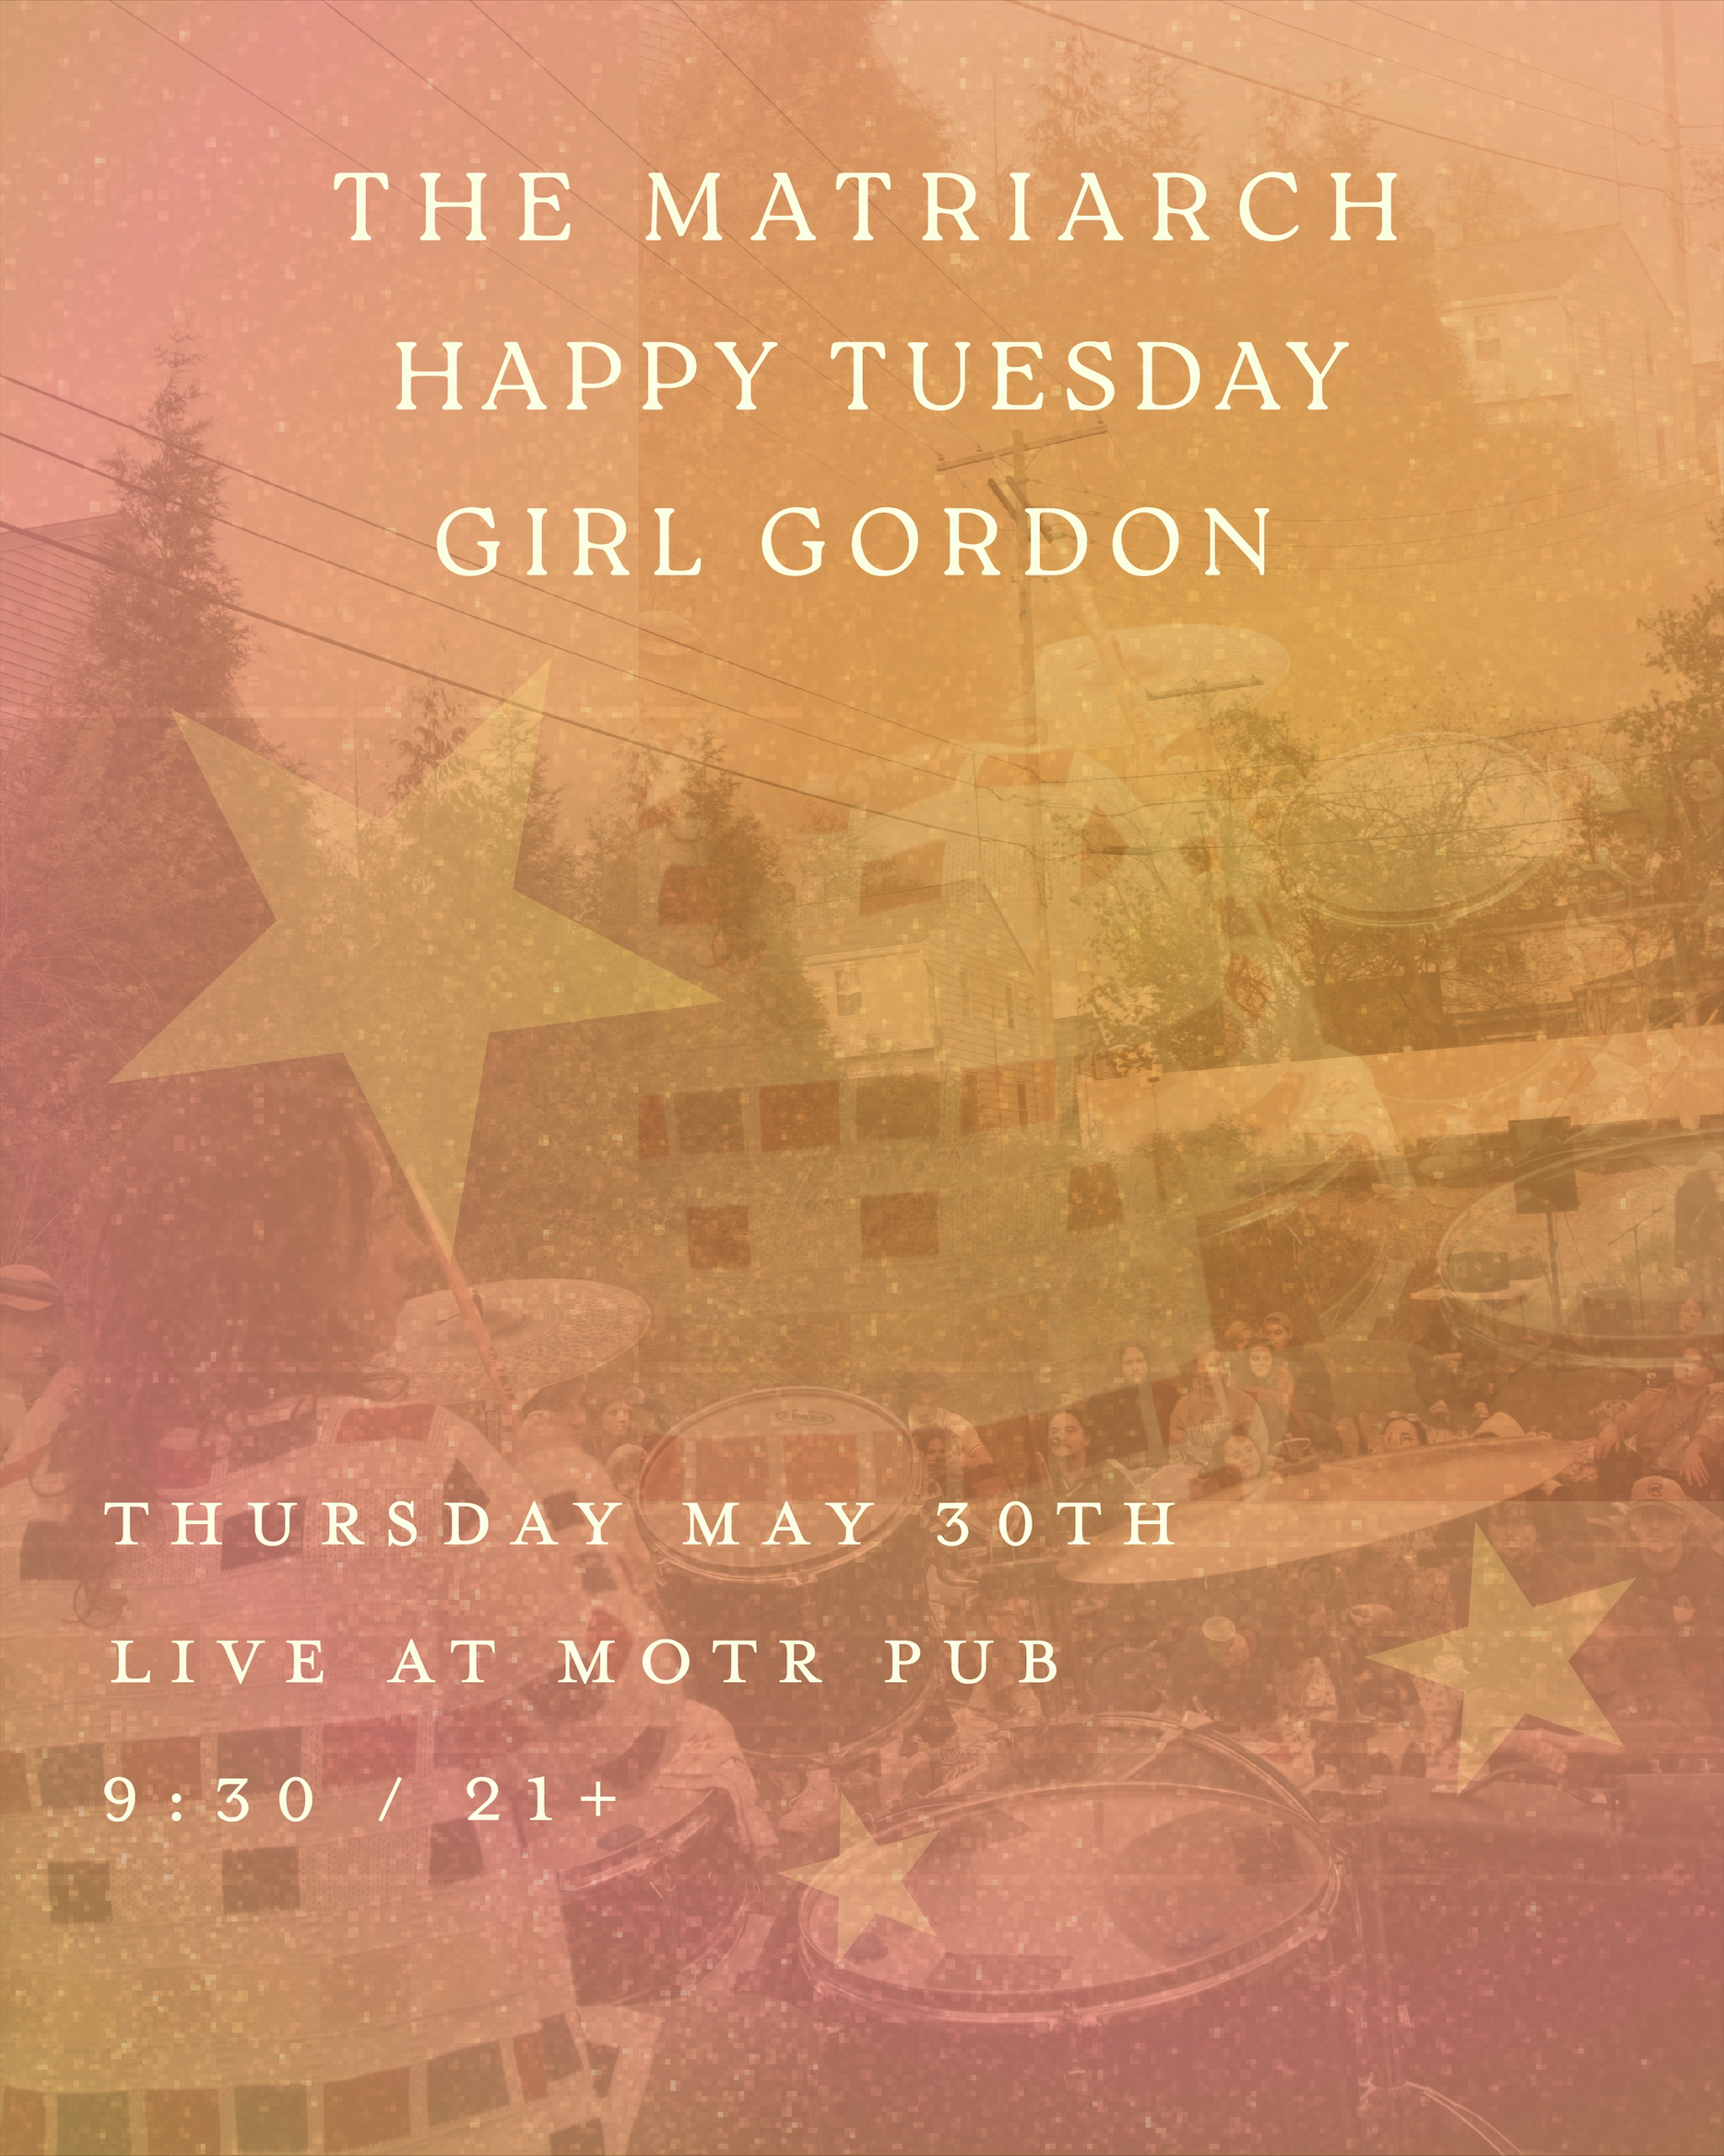 HAPPY TUESDAY, THE MATRIARCH (Bloomington), GIRL GORDON